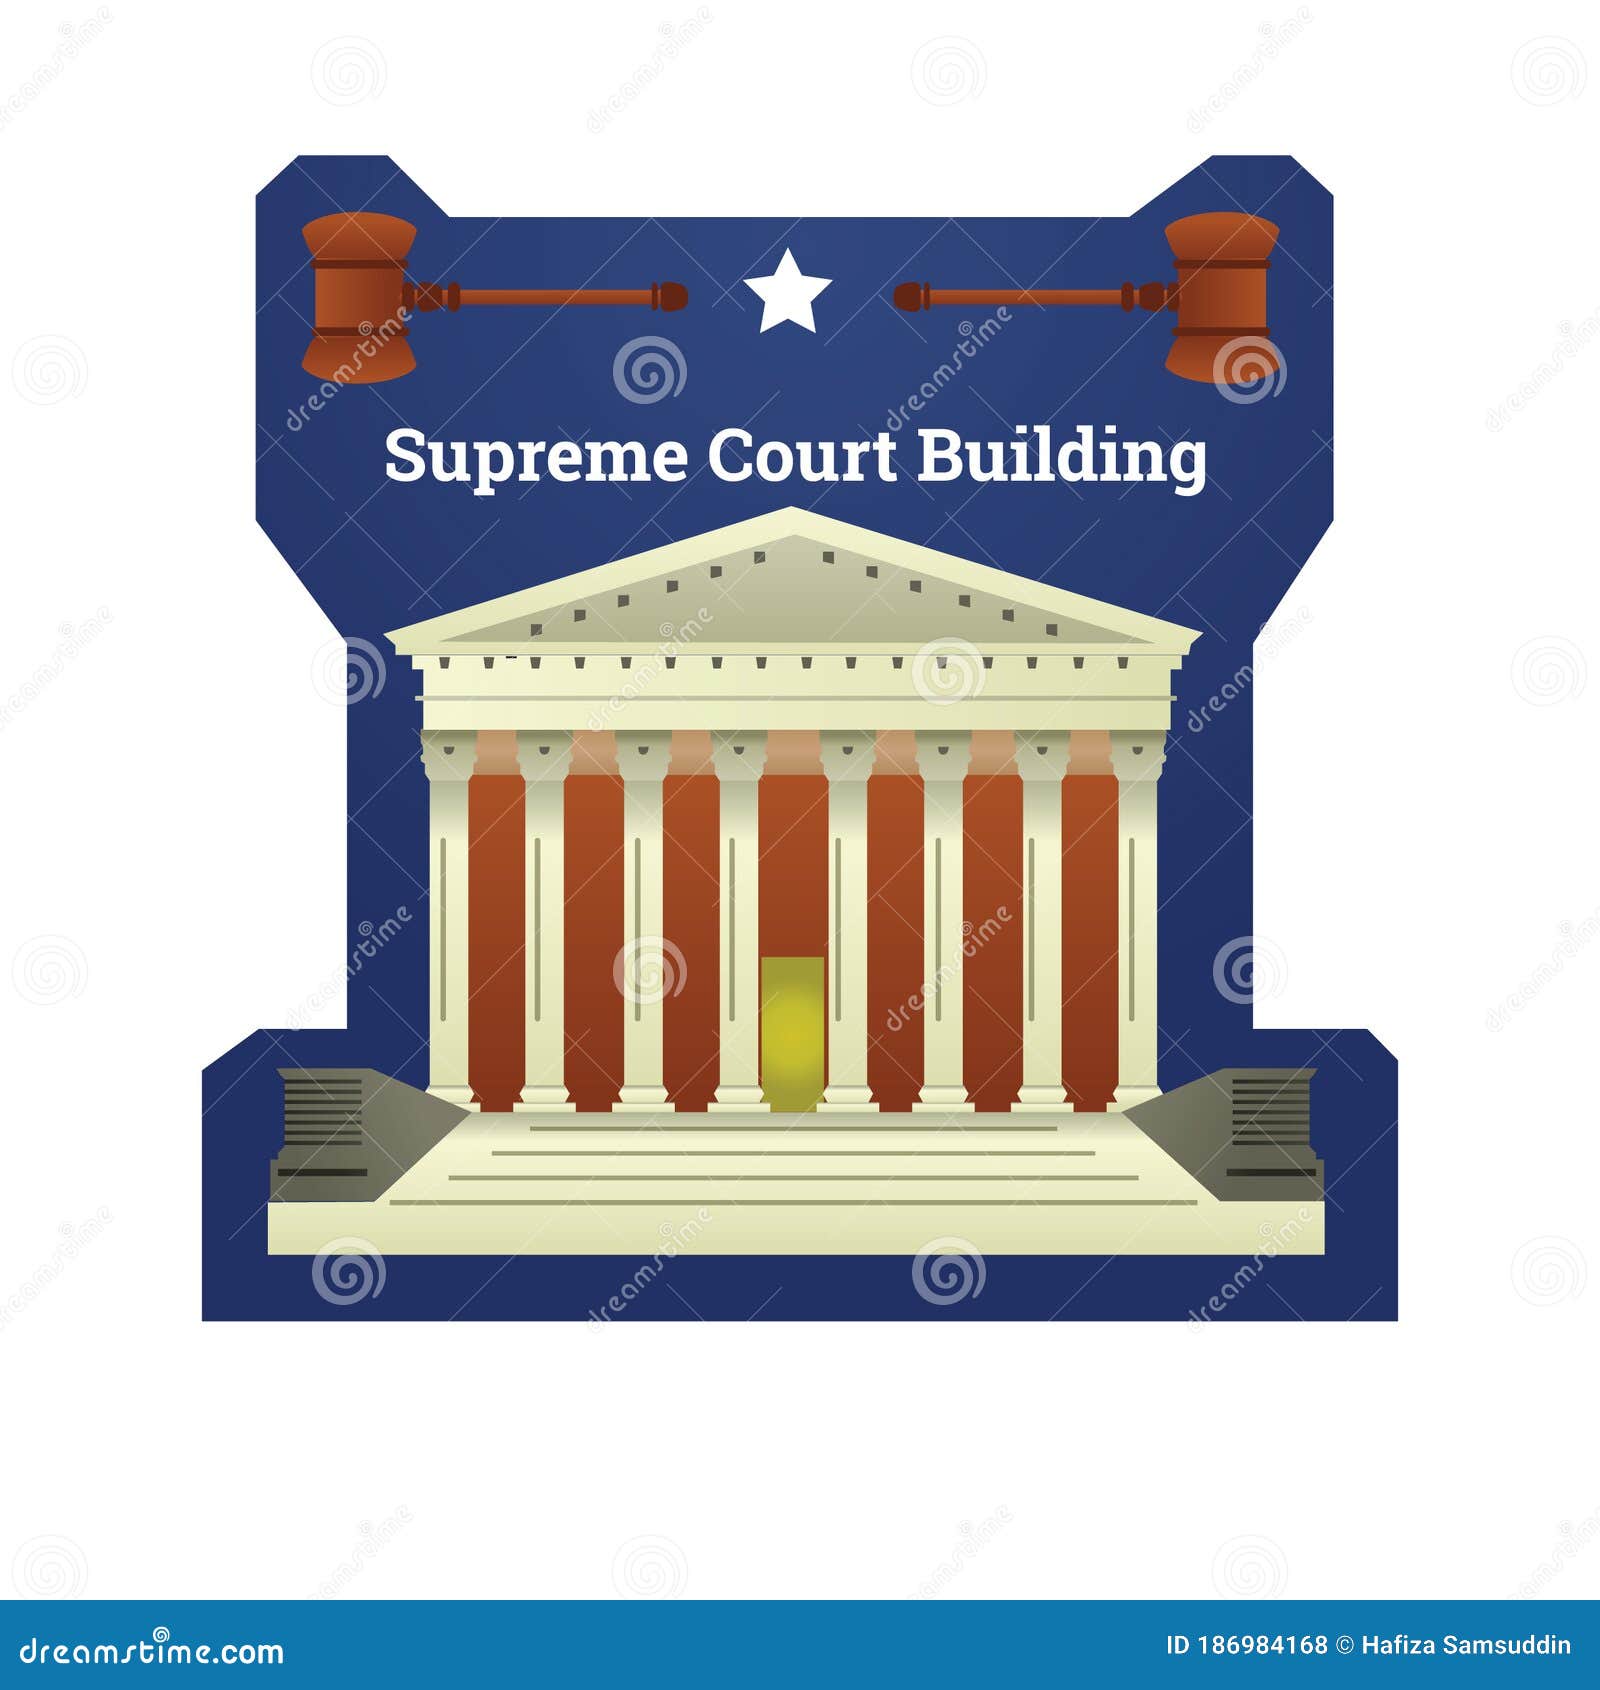 judicial branch building clip art